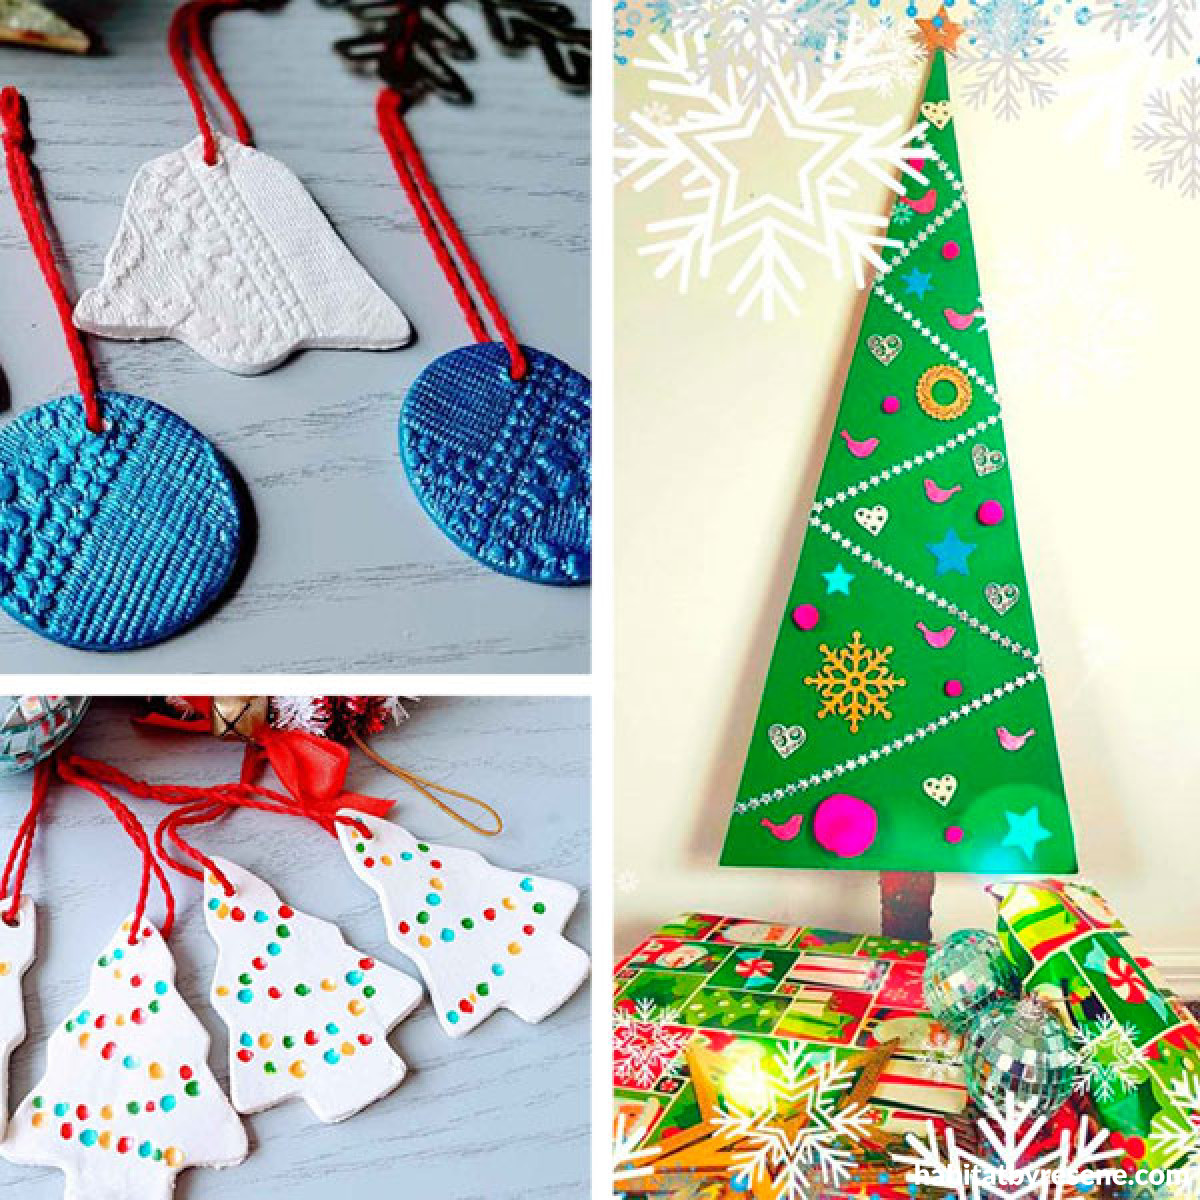 DIY ideas for crafty Christmas decoration | Habitat by Resene